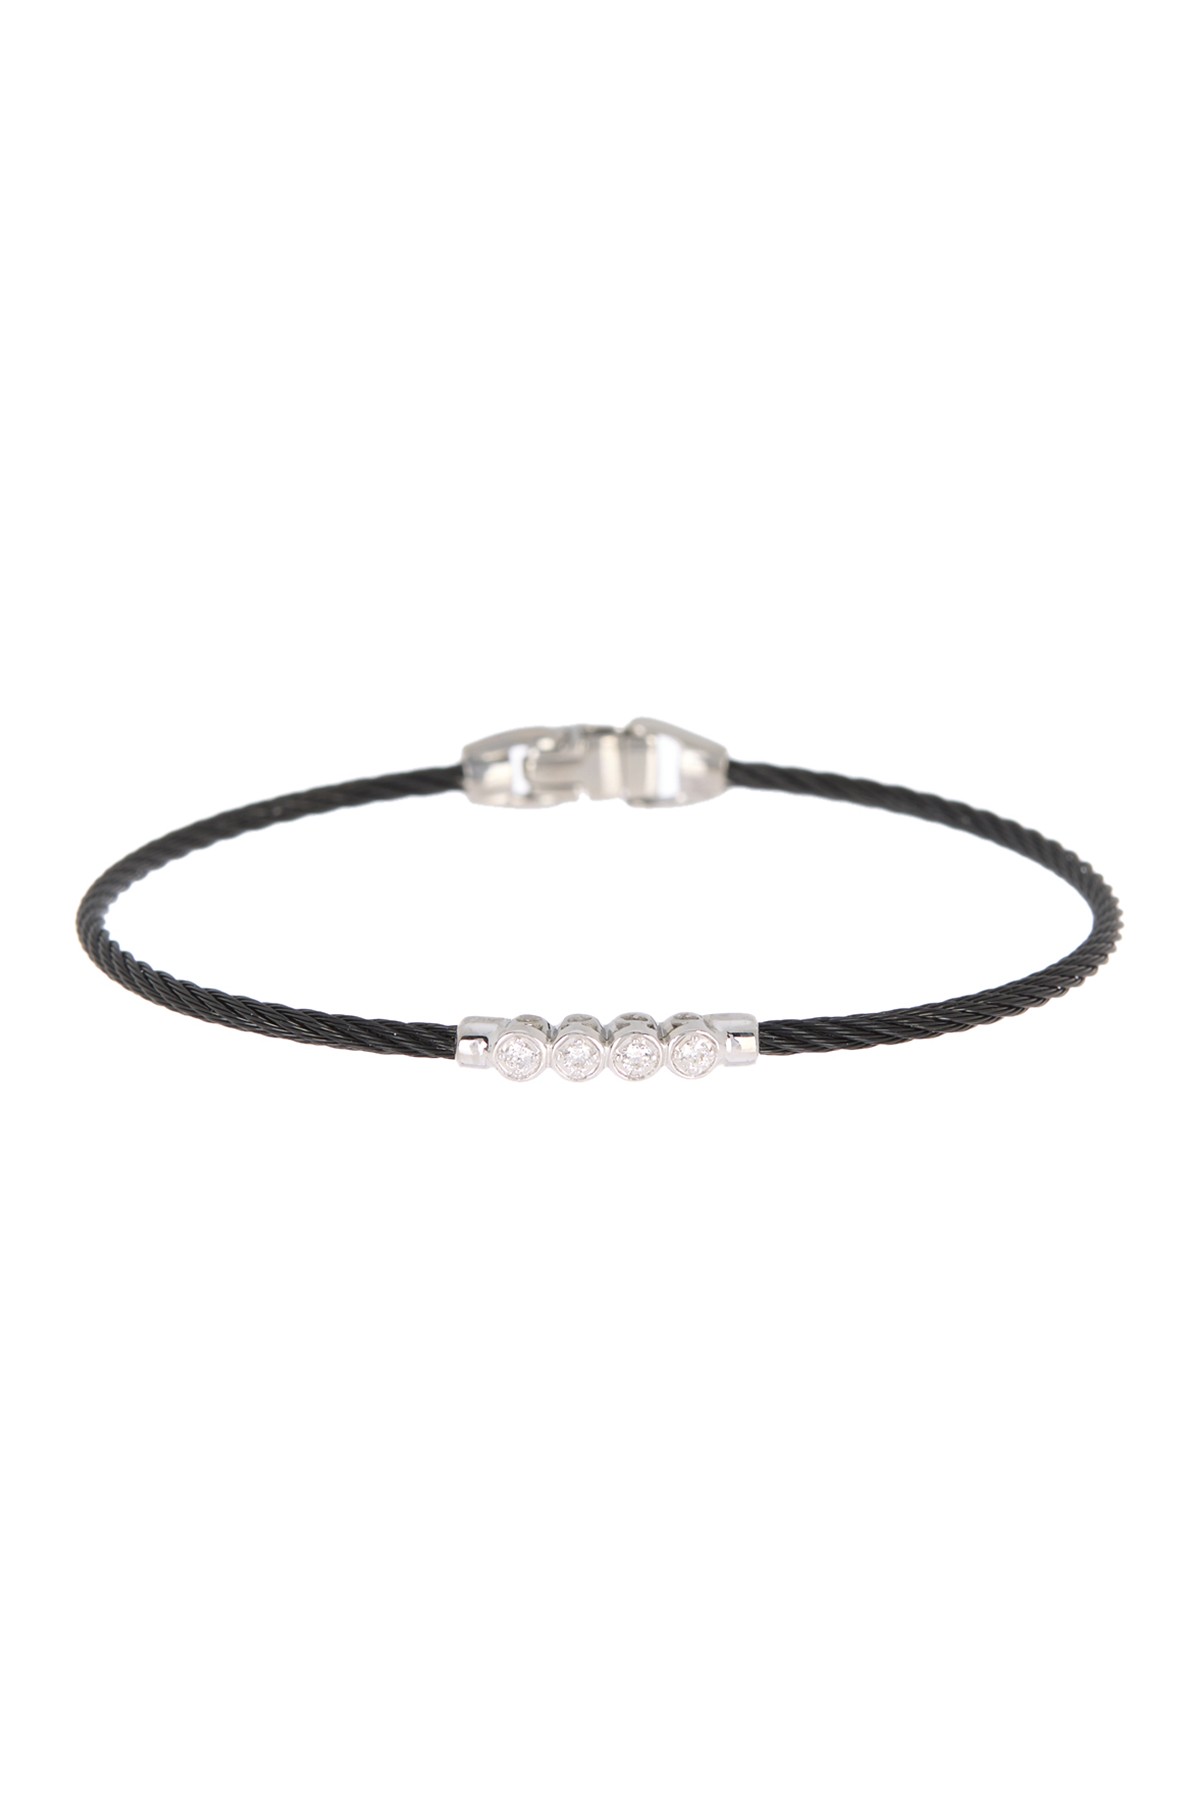 18K White Gold Black Stainless Steel Diamond Cable Cascade Chain Bracelet ALOR